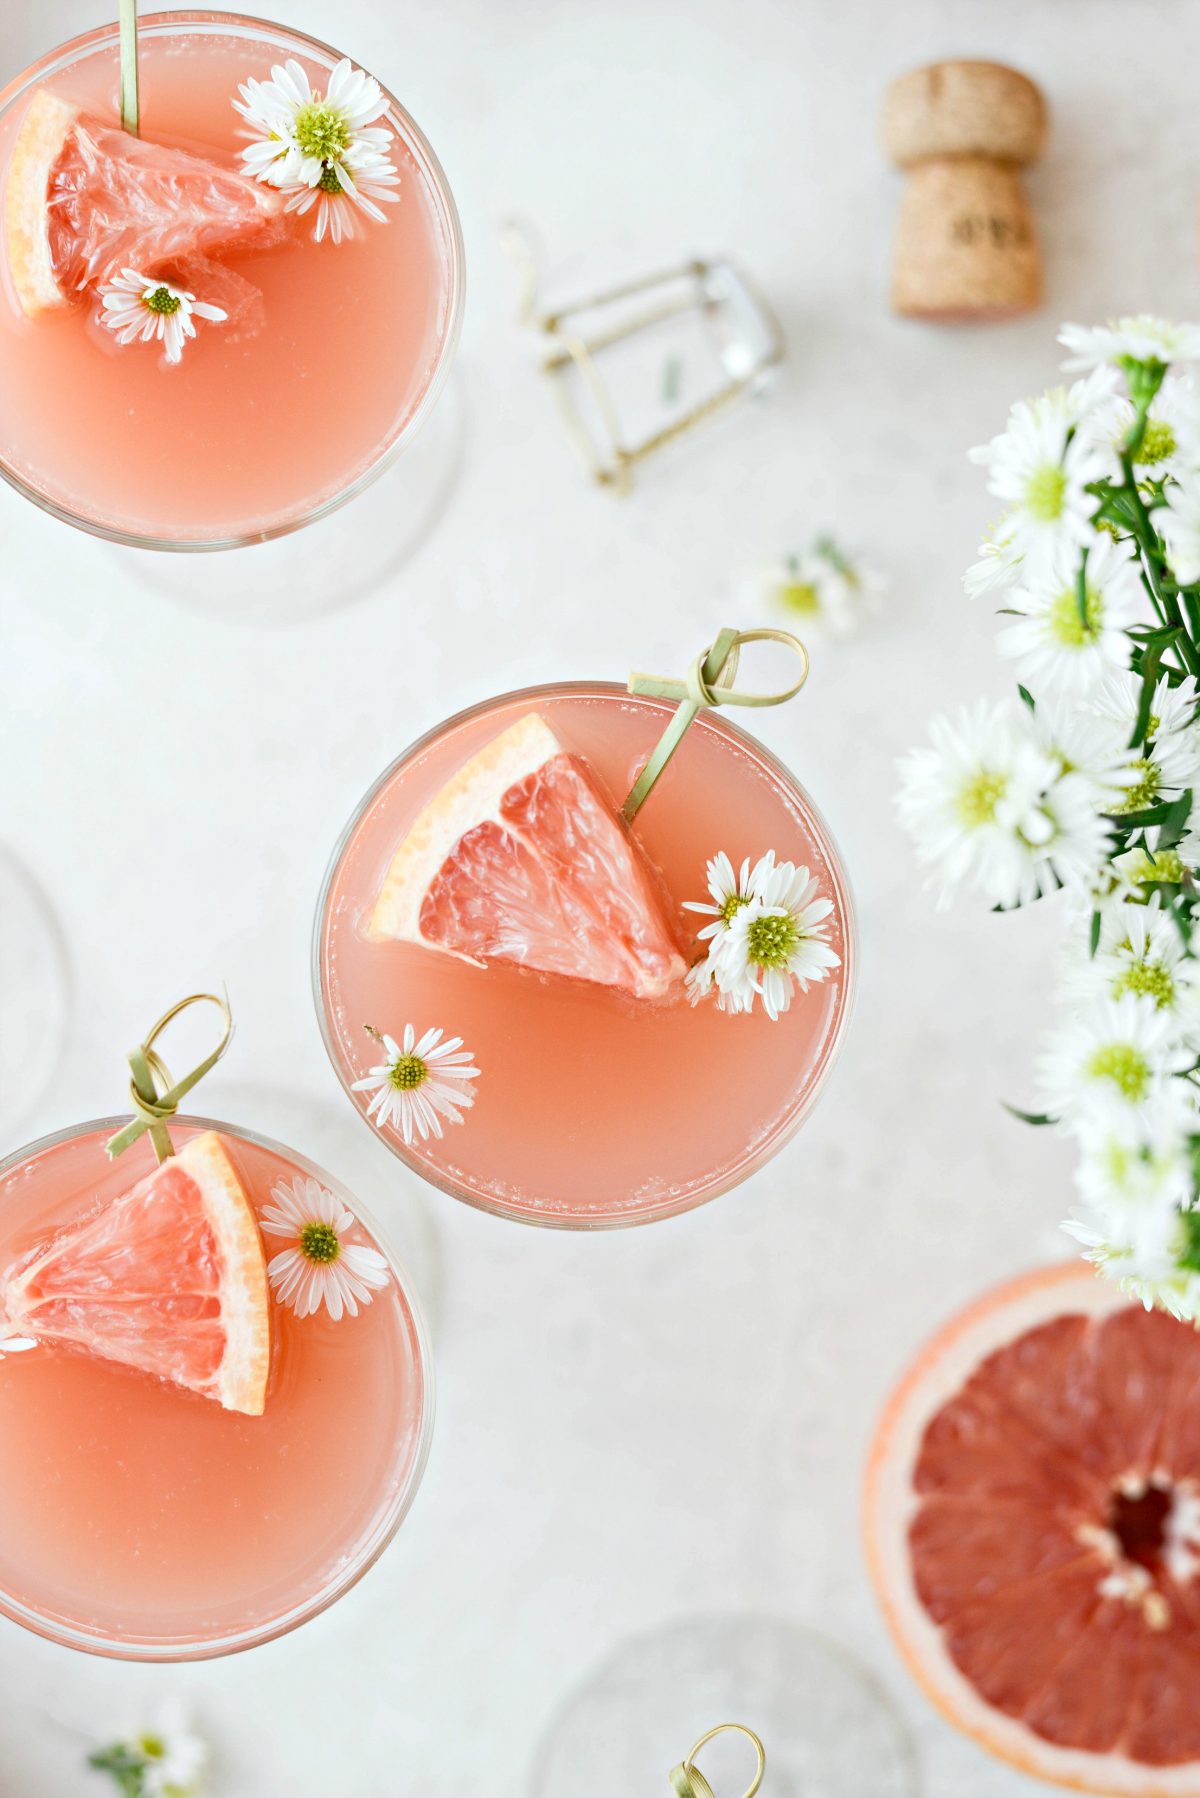 grepfrut Rosa Xtrasex Mimosas l SimplyScratch.com # adult # băutură # grapefruit # trandafir # mimosa # Paște # brunch # Ziua Mamei